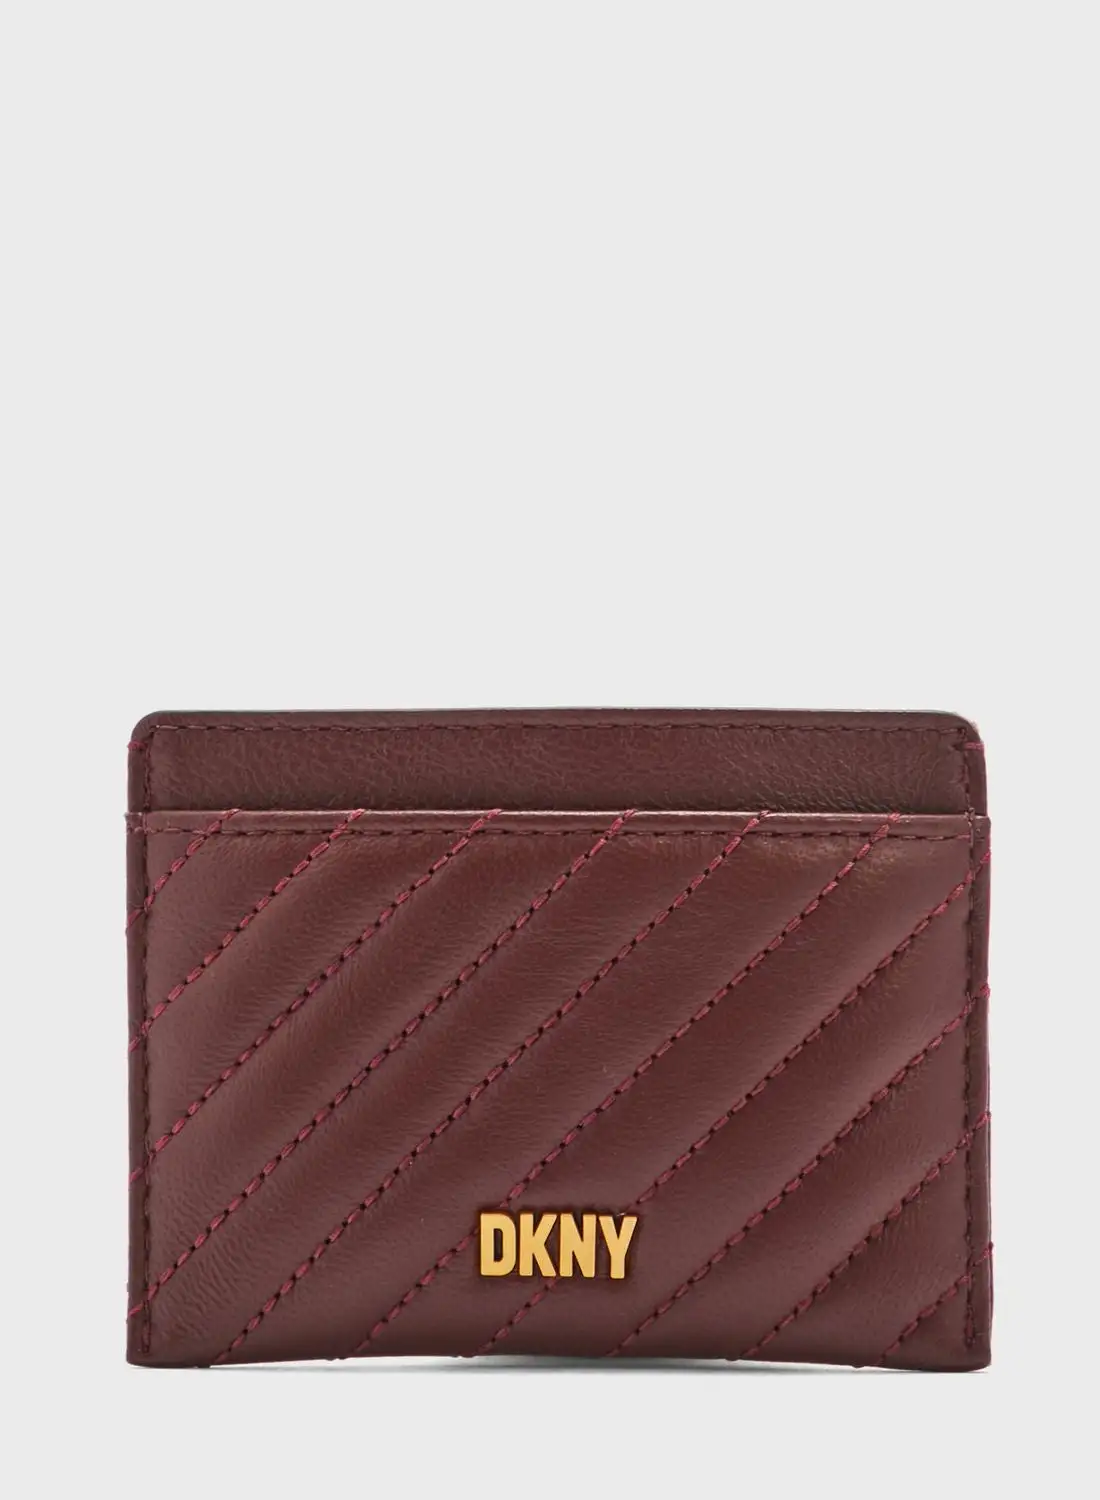 DKNY Amber Card Case Bag